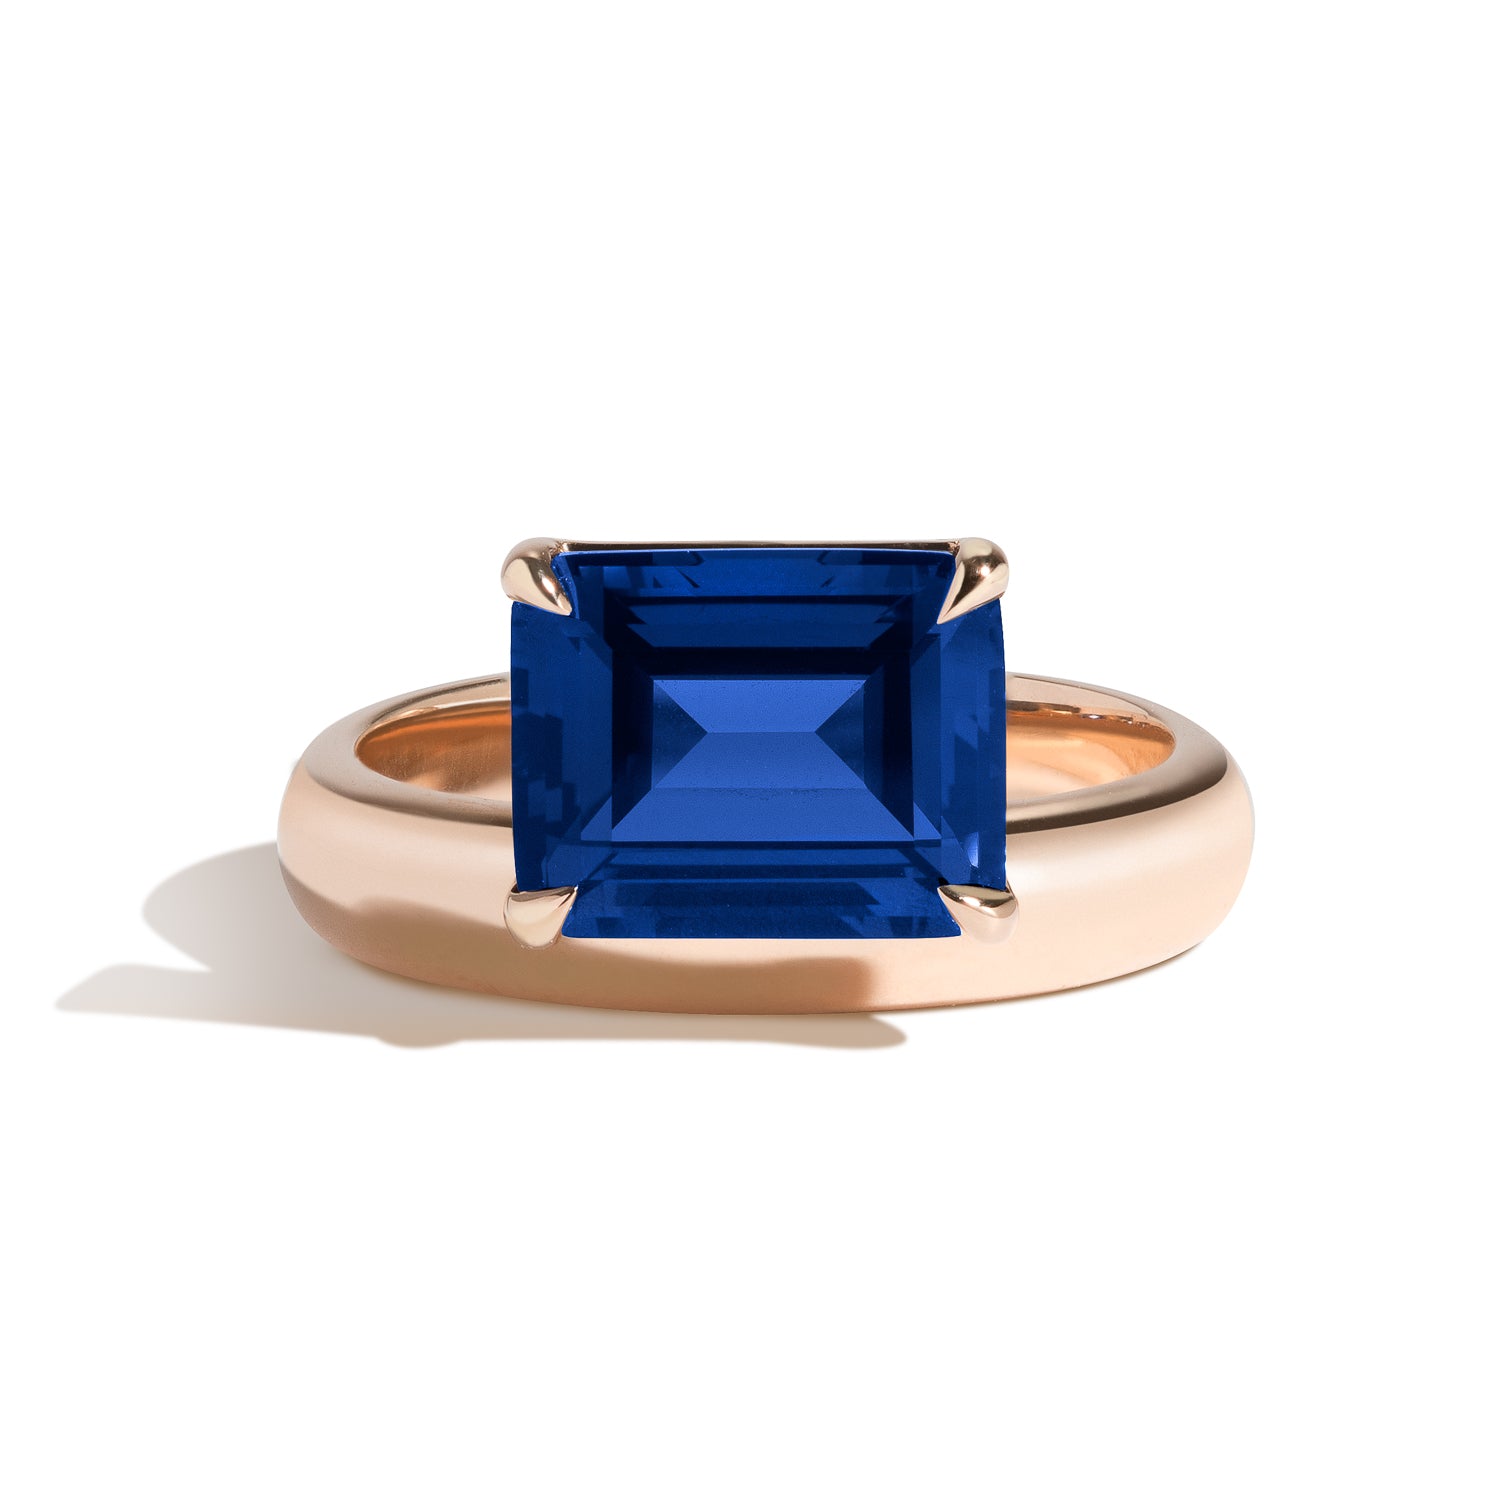 Shahla Karimi Jewelry Wright Emerald Cut Sapphire Offset Donut Ring 14K Rose Gold